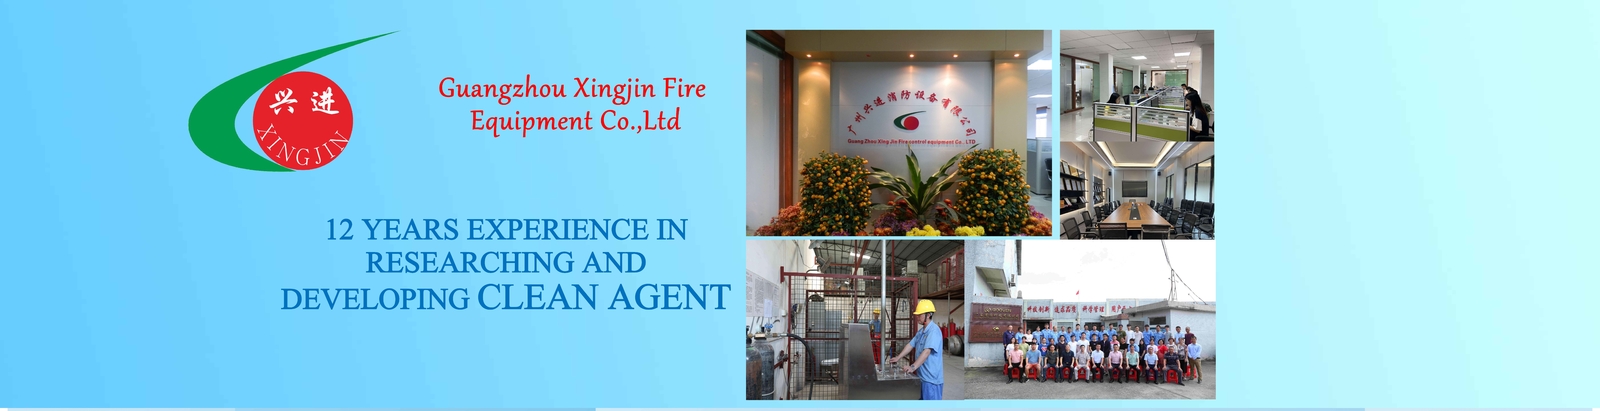 Cina terbaik Otomatis Fire Extinguisher penjualan